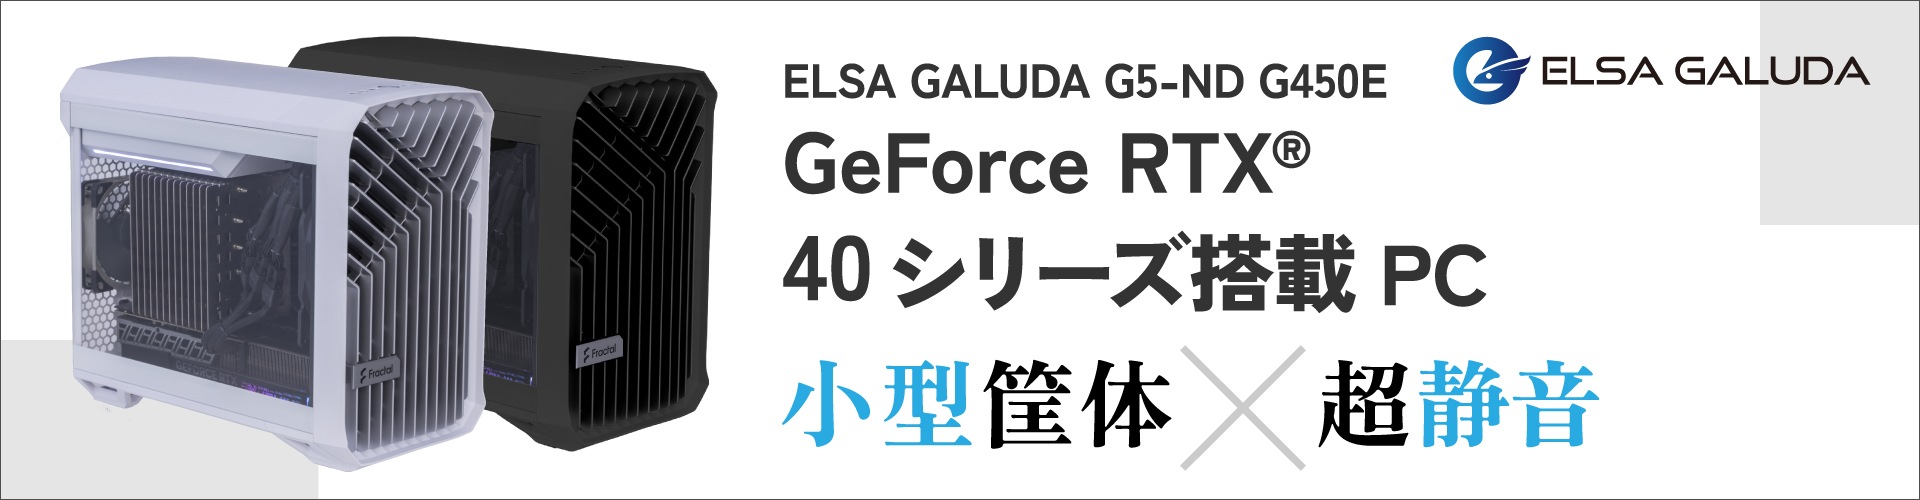 ELSA GALUDA G5-ND G450E概要